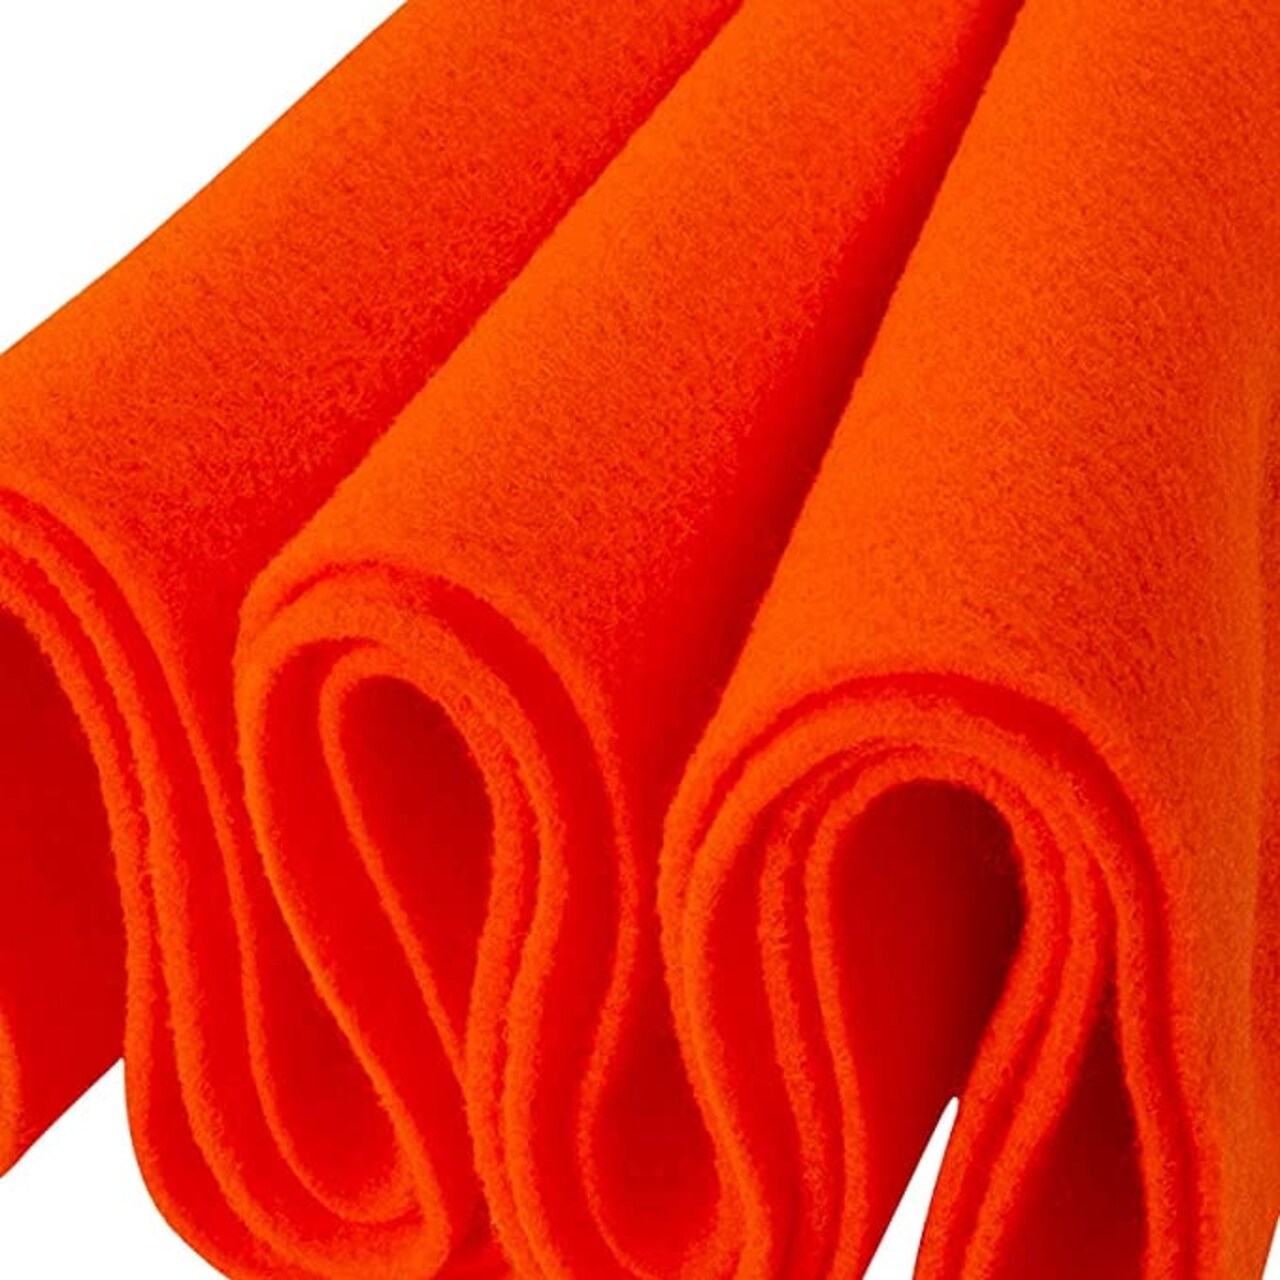 FabricLA Craft Felt Fabric - 36 X 36 Inch Wide & 1.6mm Thick Felt Fabric  - Use This Soft Felt for Crafts - Felt Material Pack - Neon Orange A22